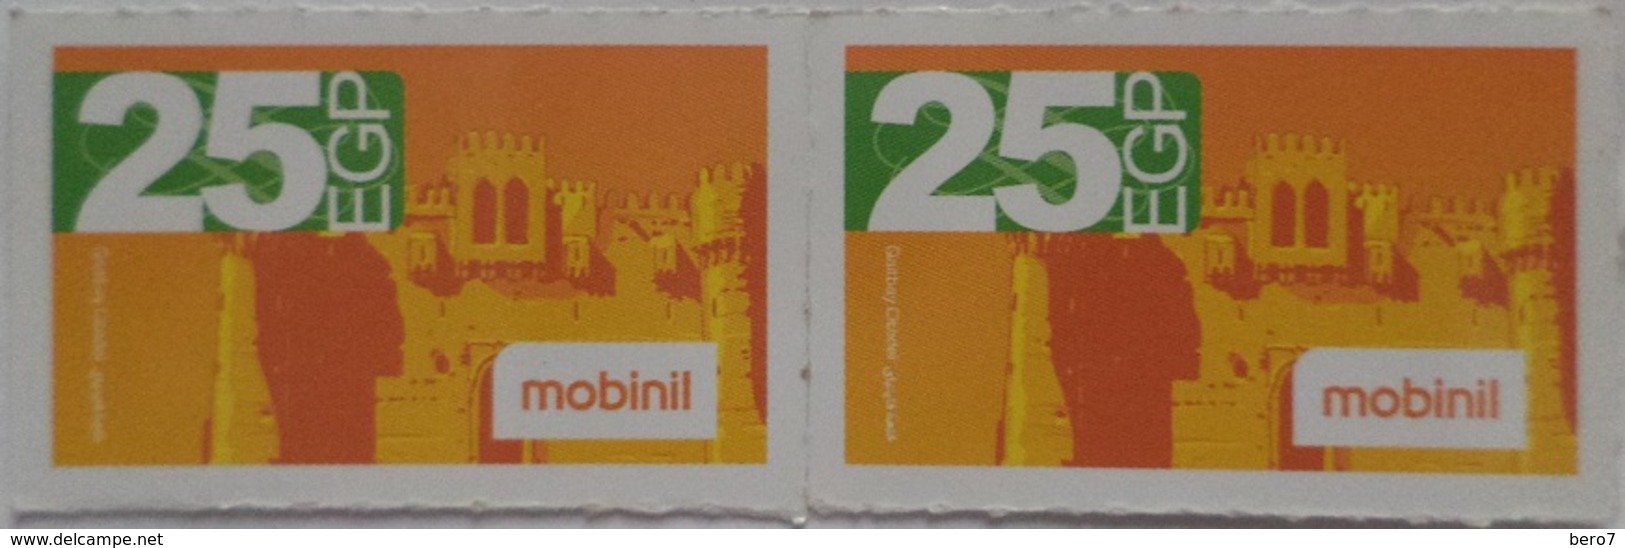 Block Of 2  (Mobinil Small Size Phone Cards) (Egypt) (Egypte) (Egitto) (Ägypten) (Egipto) (Egypten) - Egypt